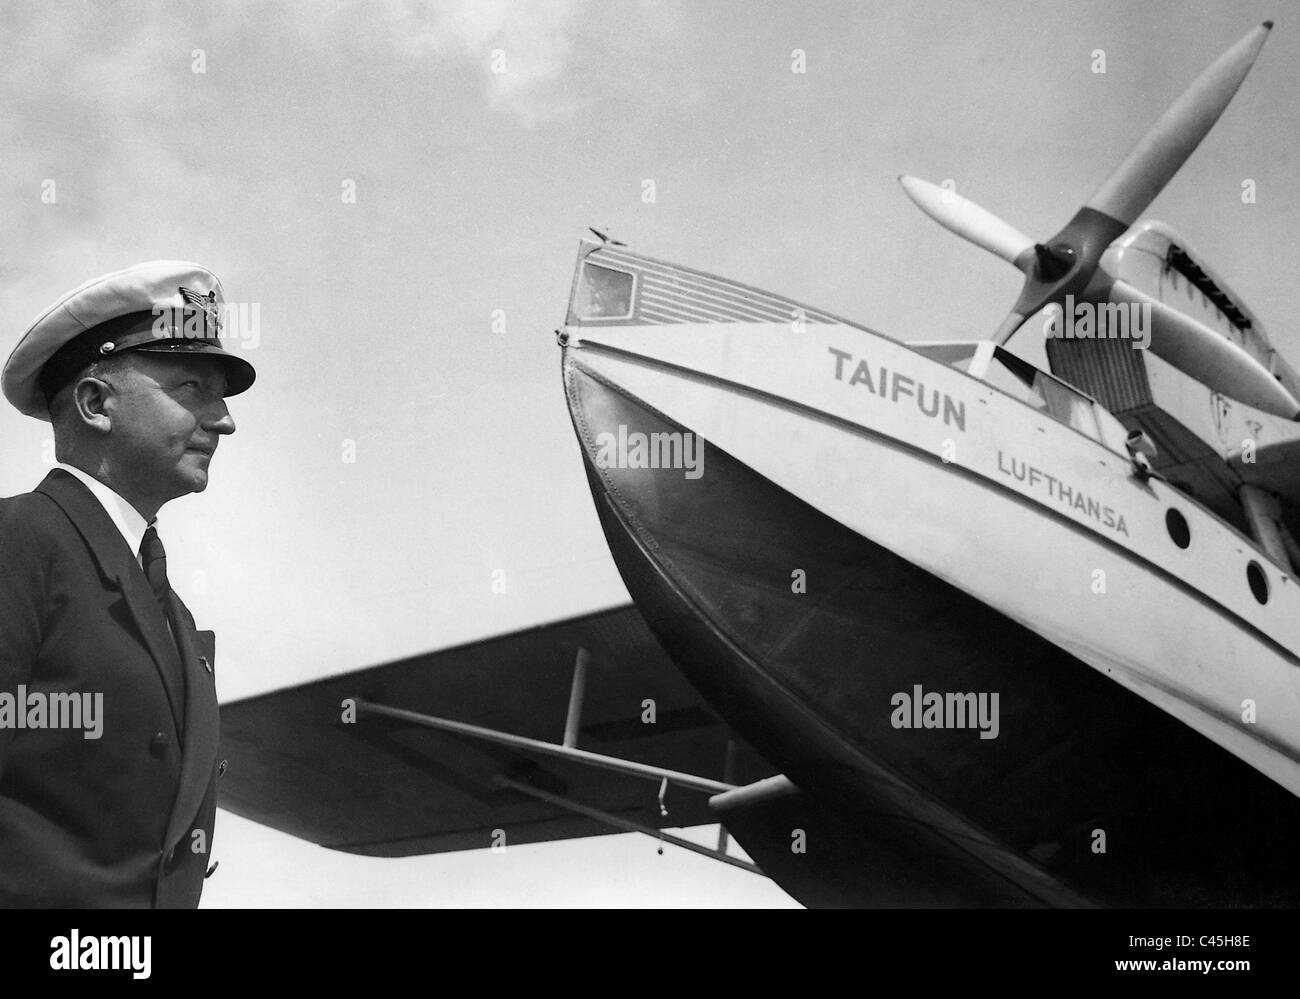 Baron Buddenbrock in front of a Dornier Do J Wal-31 'Typhoon' of Lufthansa, 1937 Stock Photo